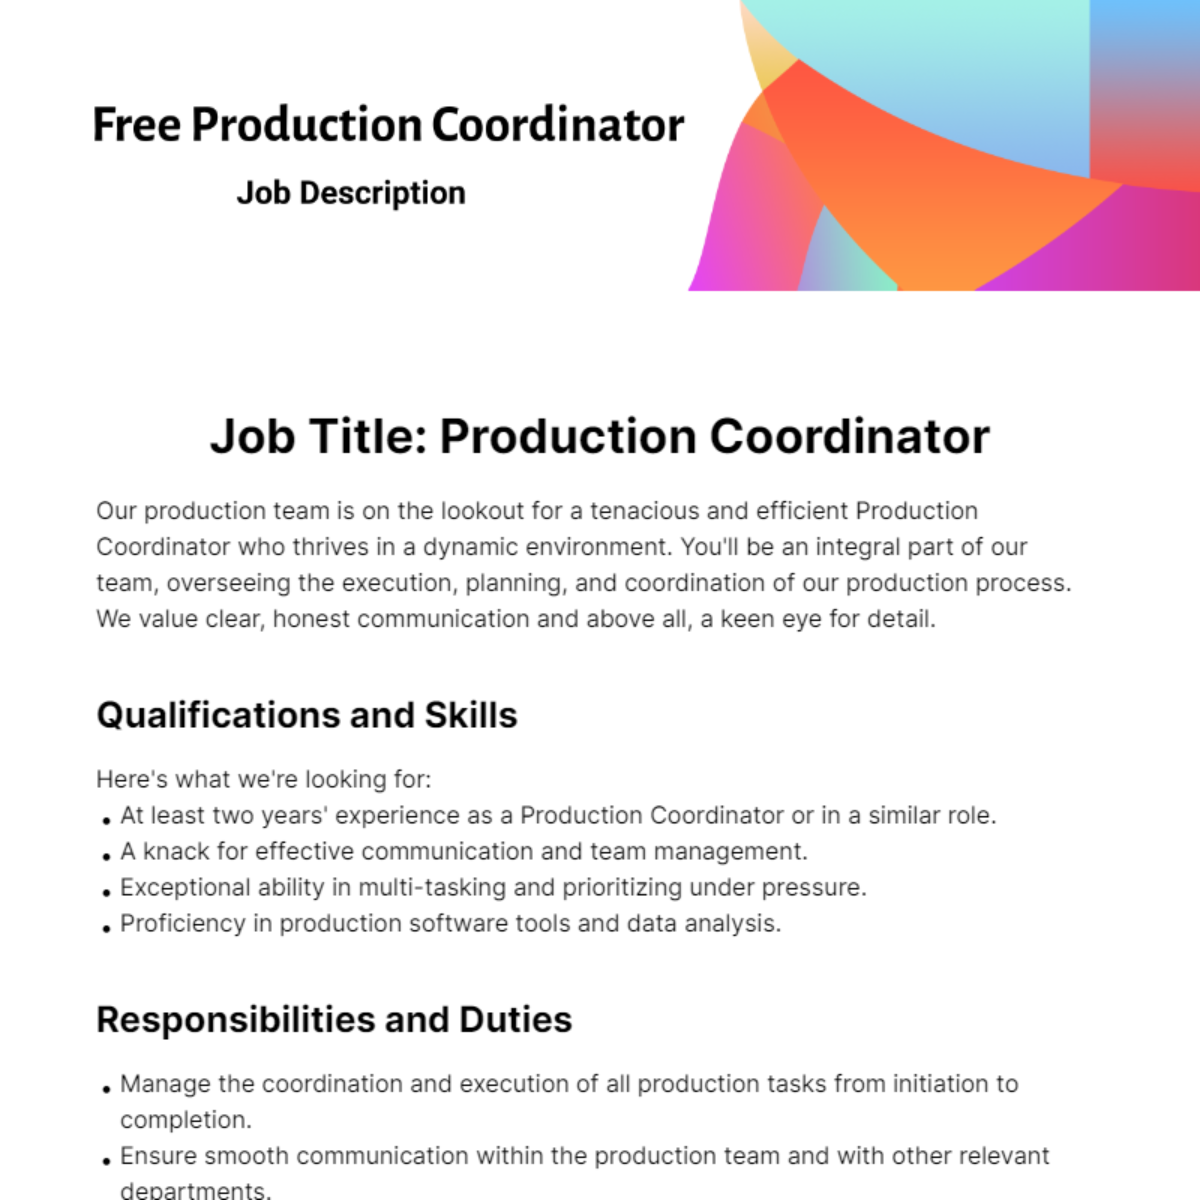 Free Production Coordinator Job Description Template